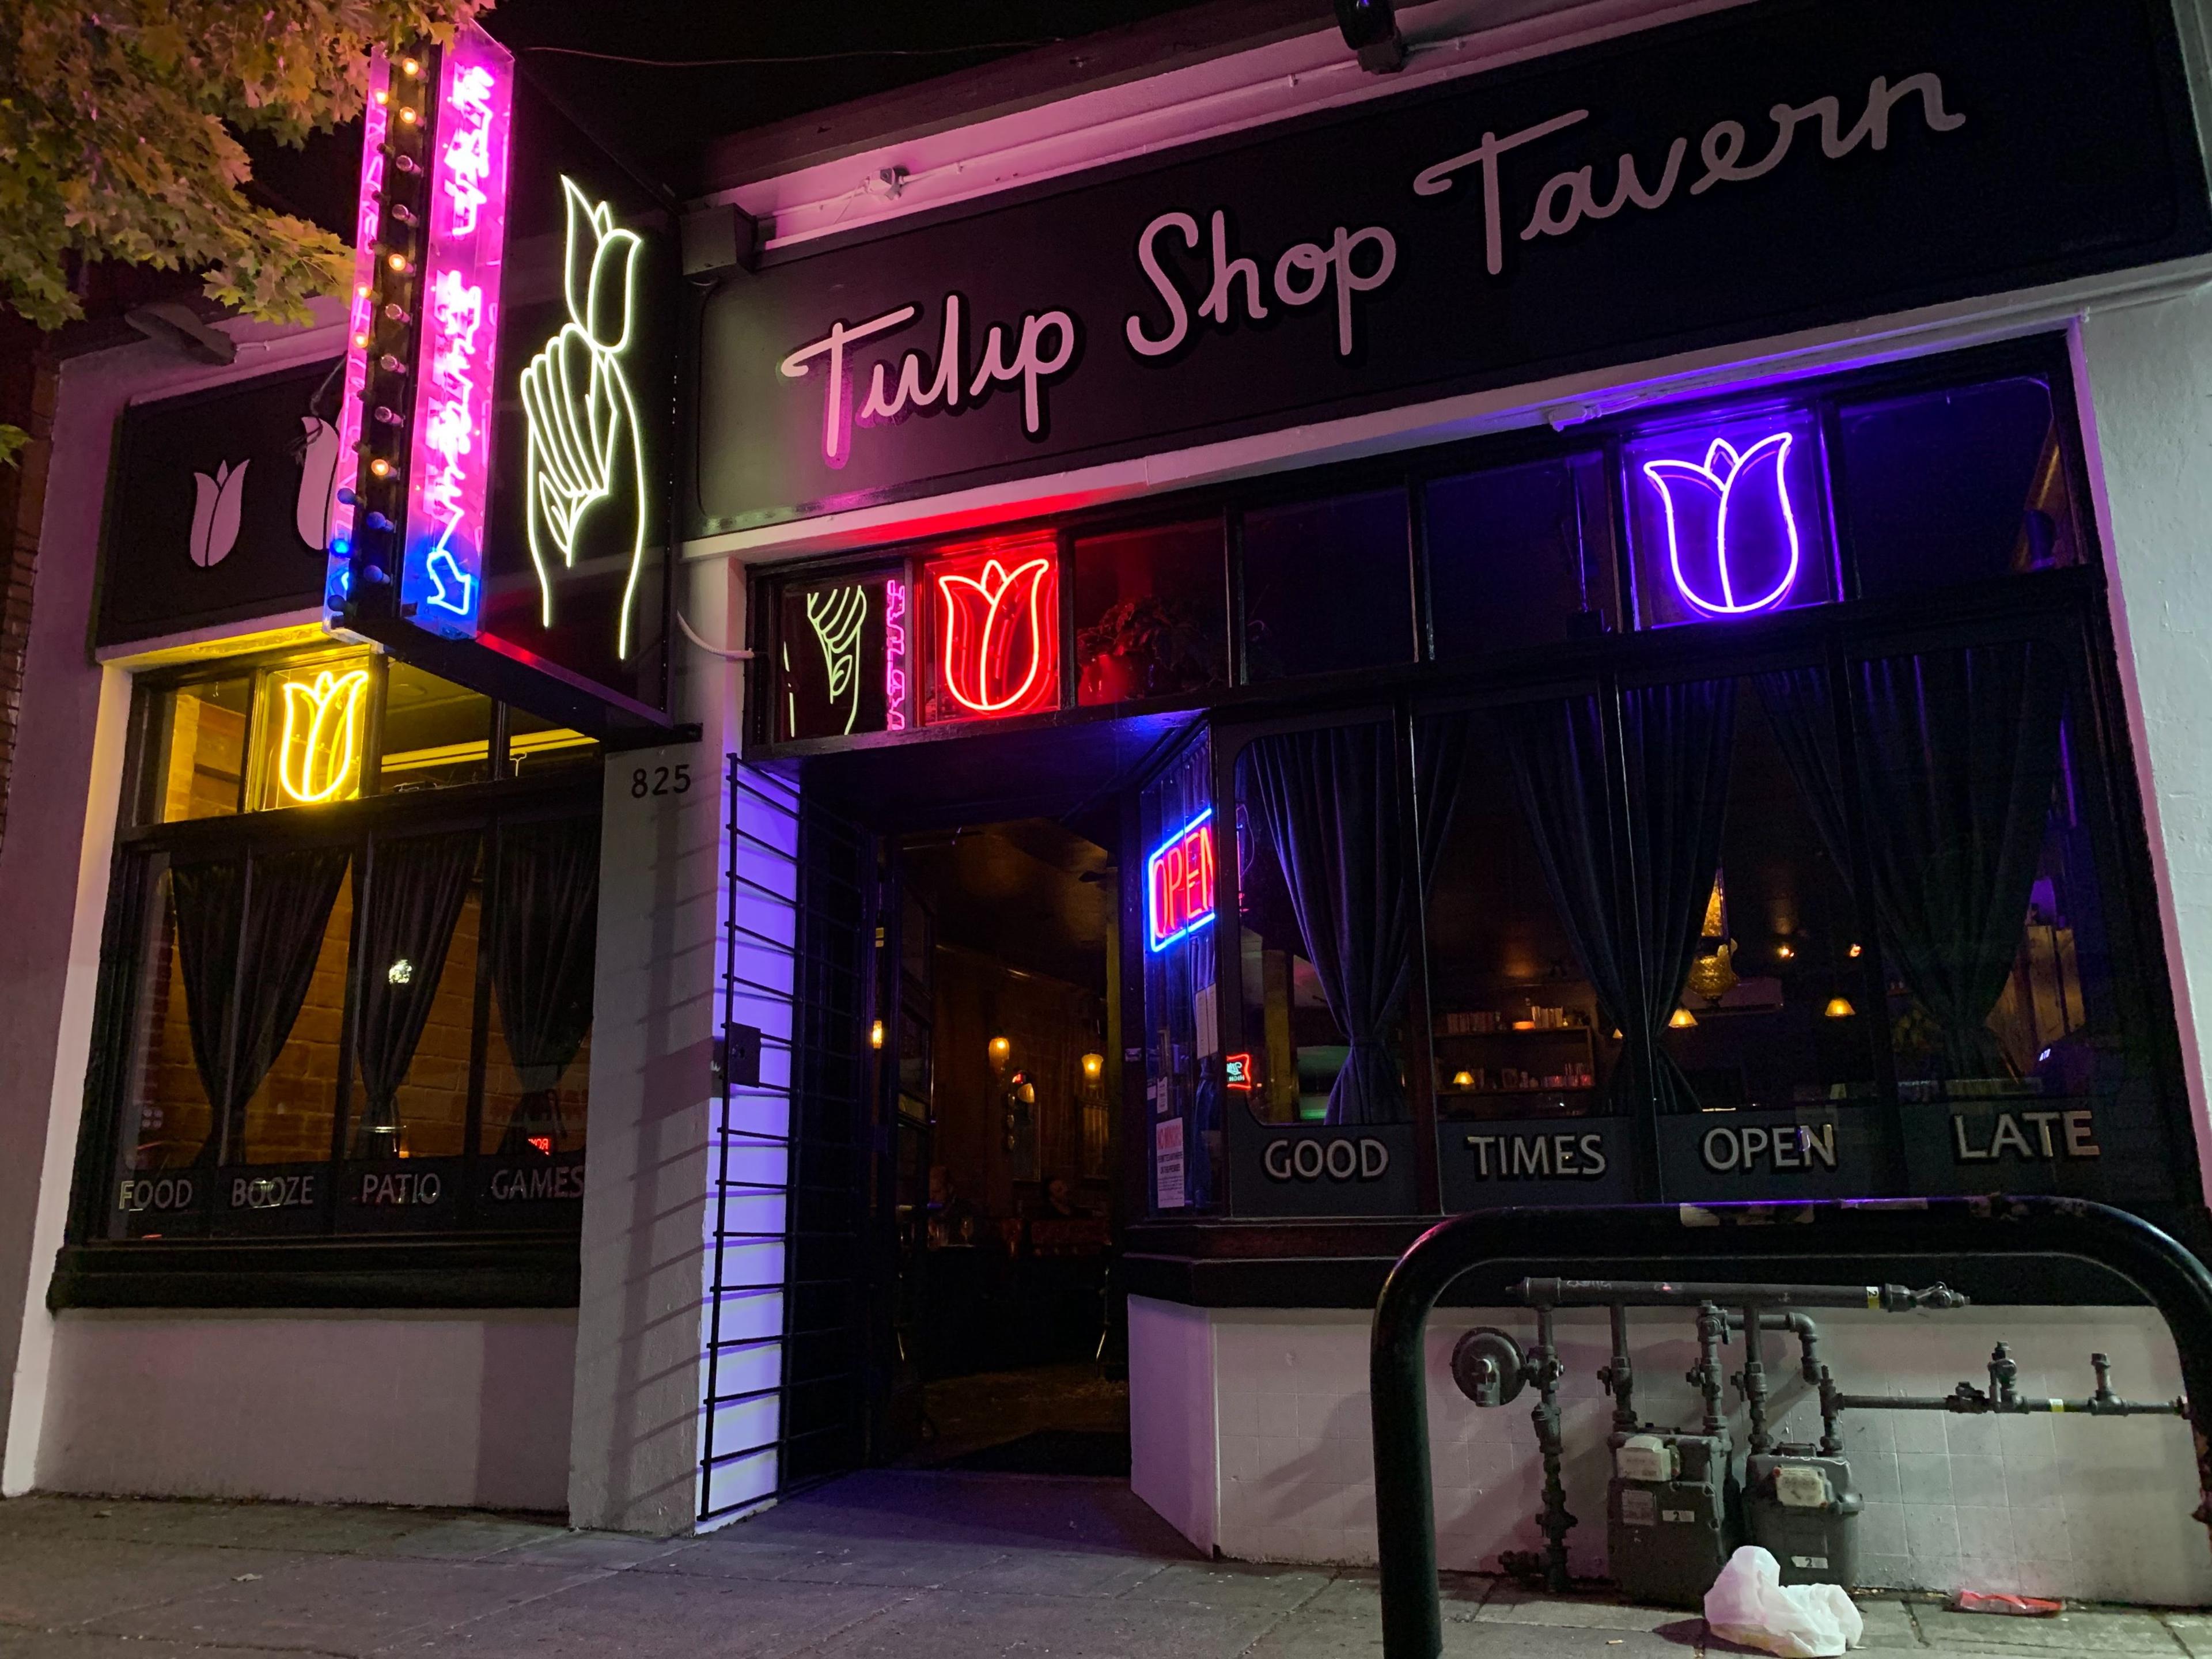 Tulip Shop Tavern